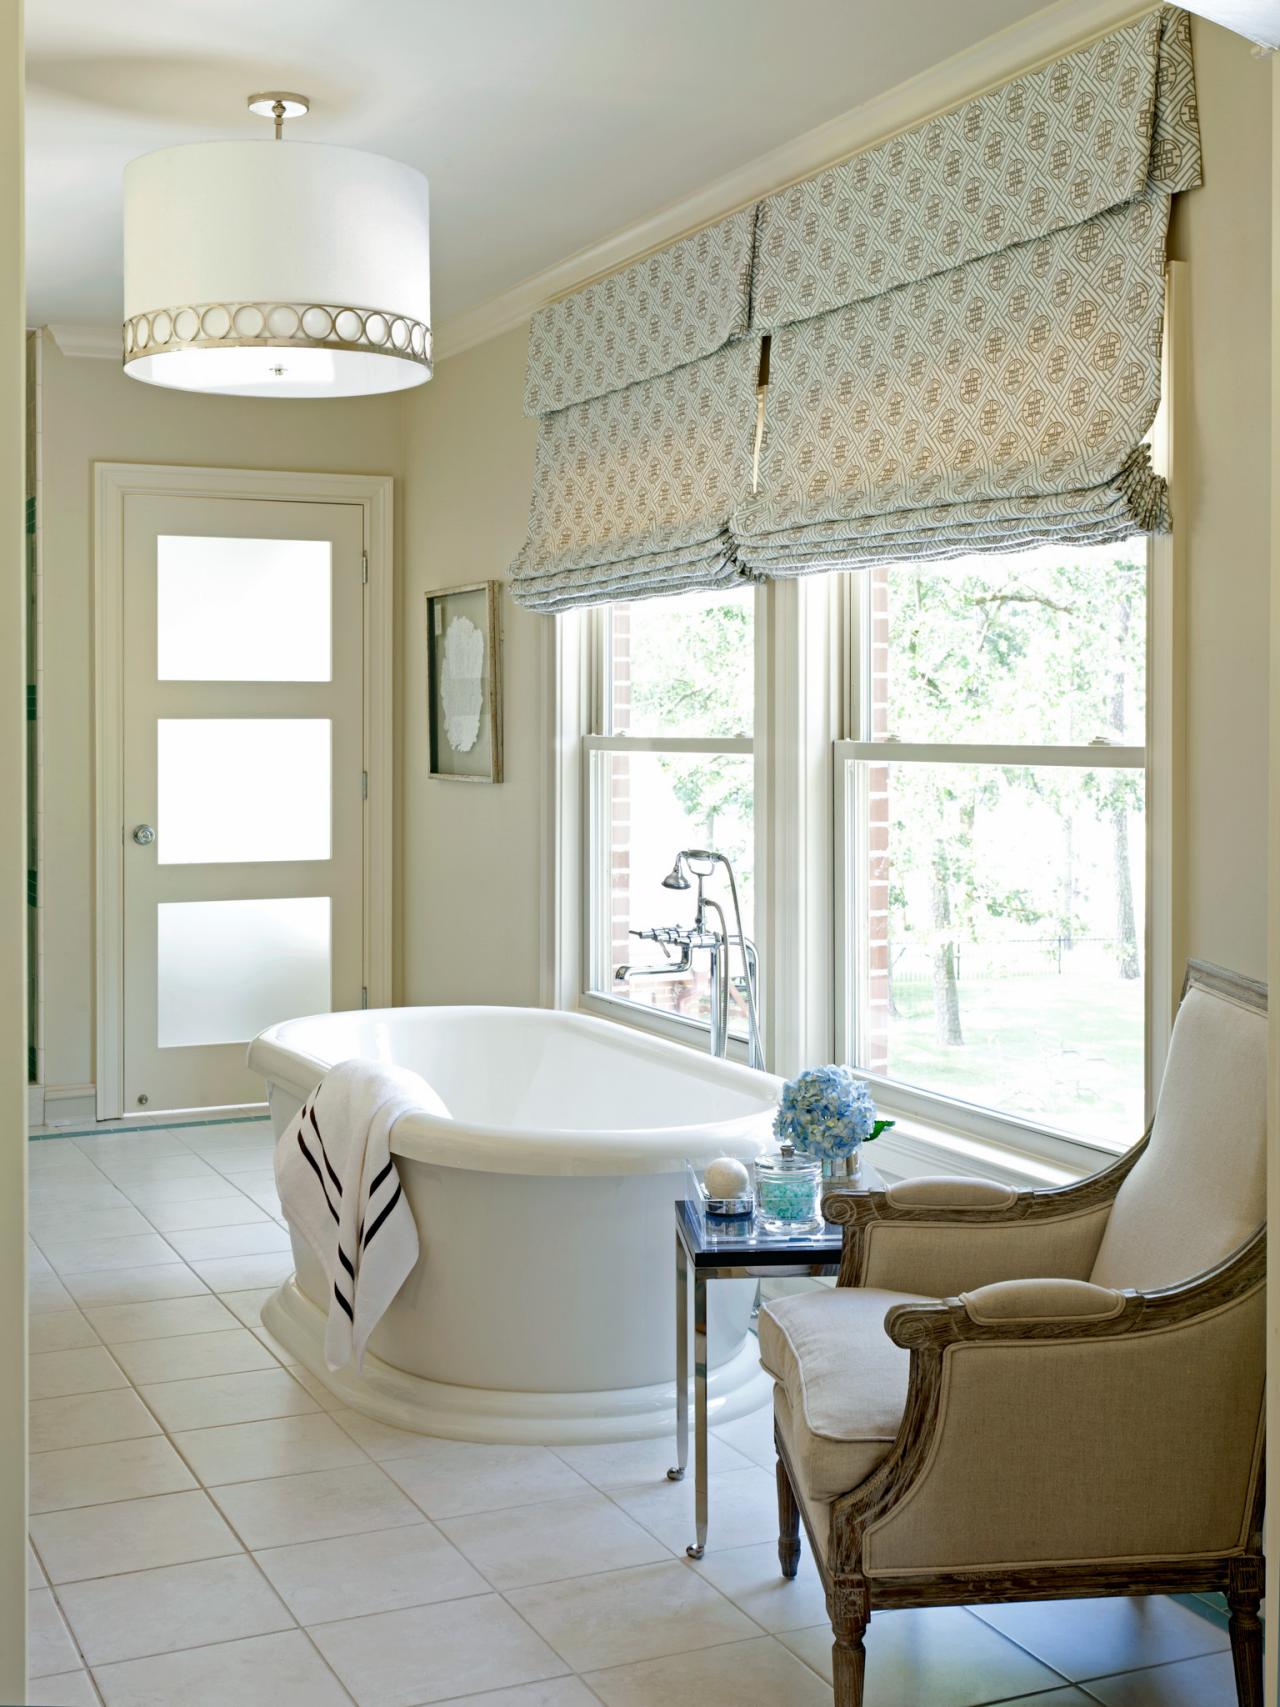 Fairley White Transitional Bathroom Design